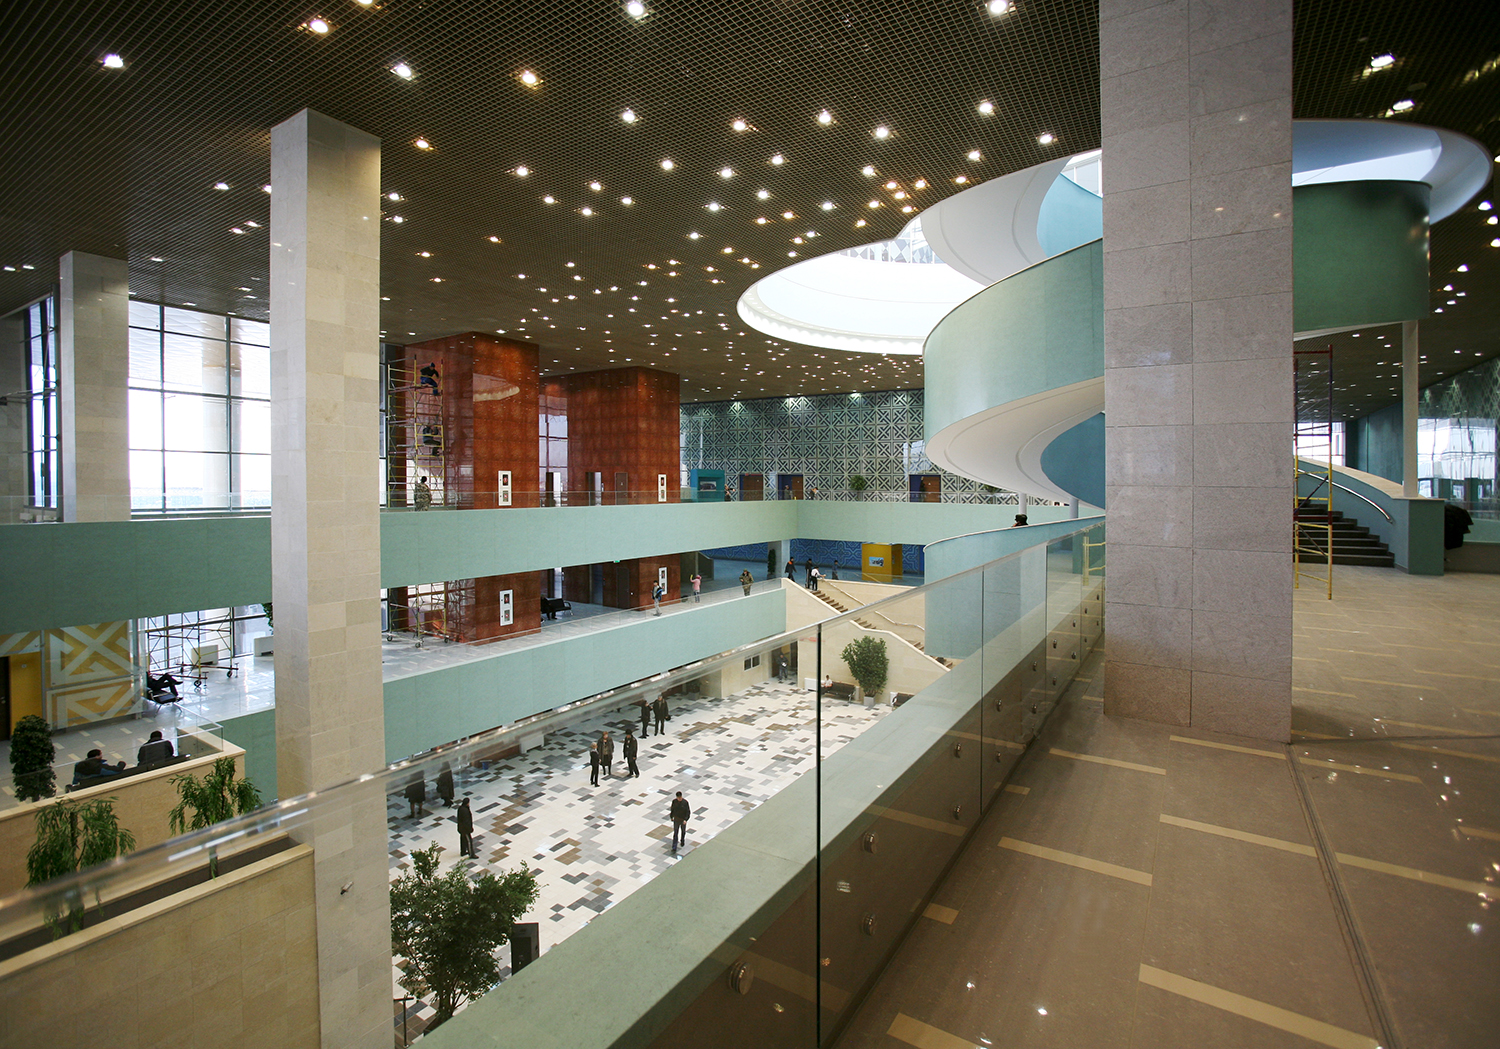 Interior of the central atrium